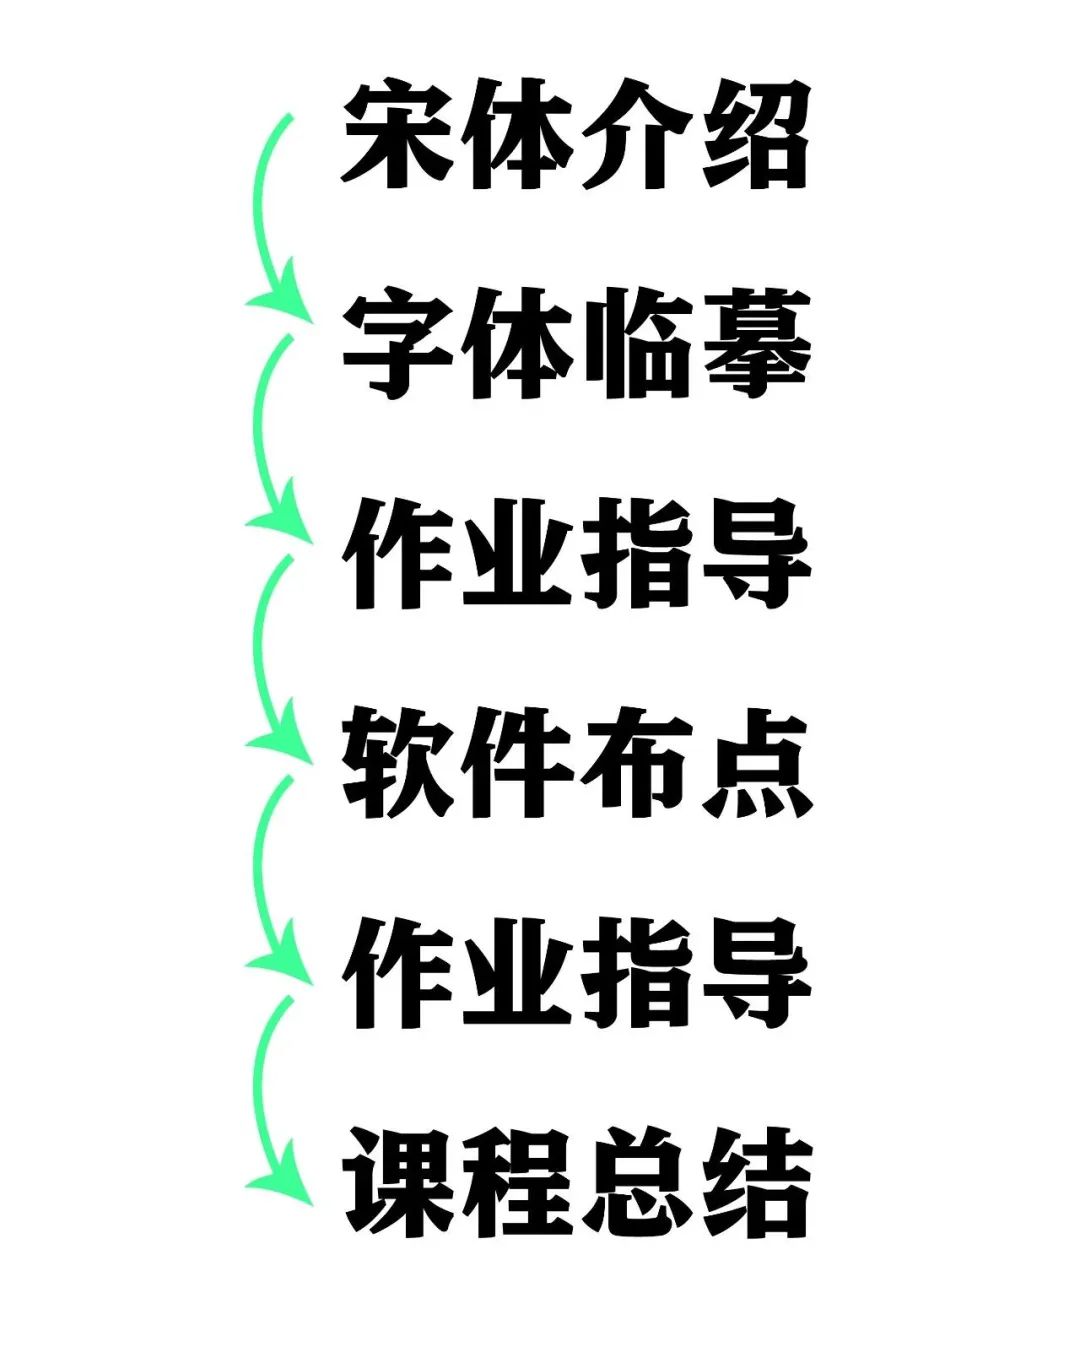 Hanyi Star Classroom丨Chinese font design training course